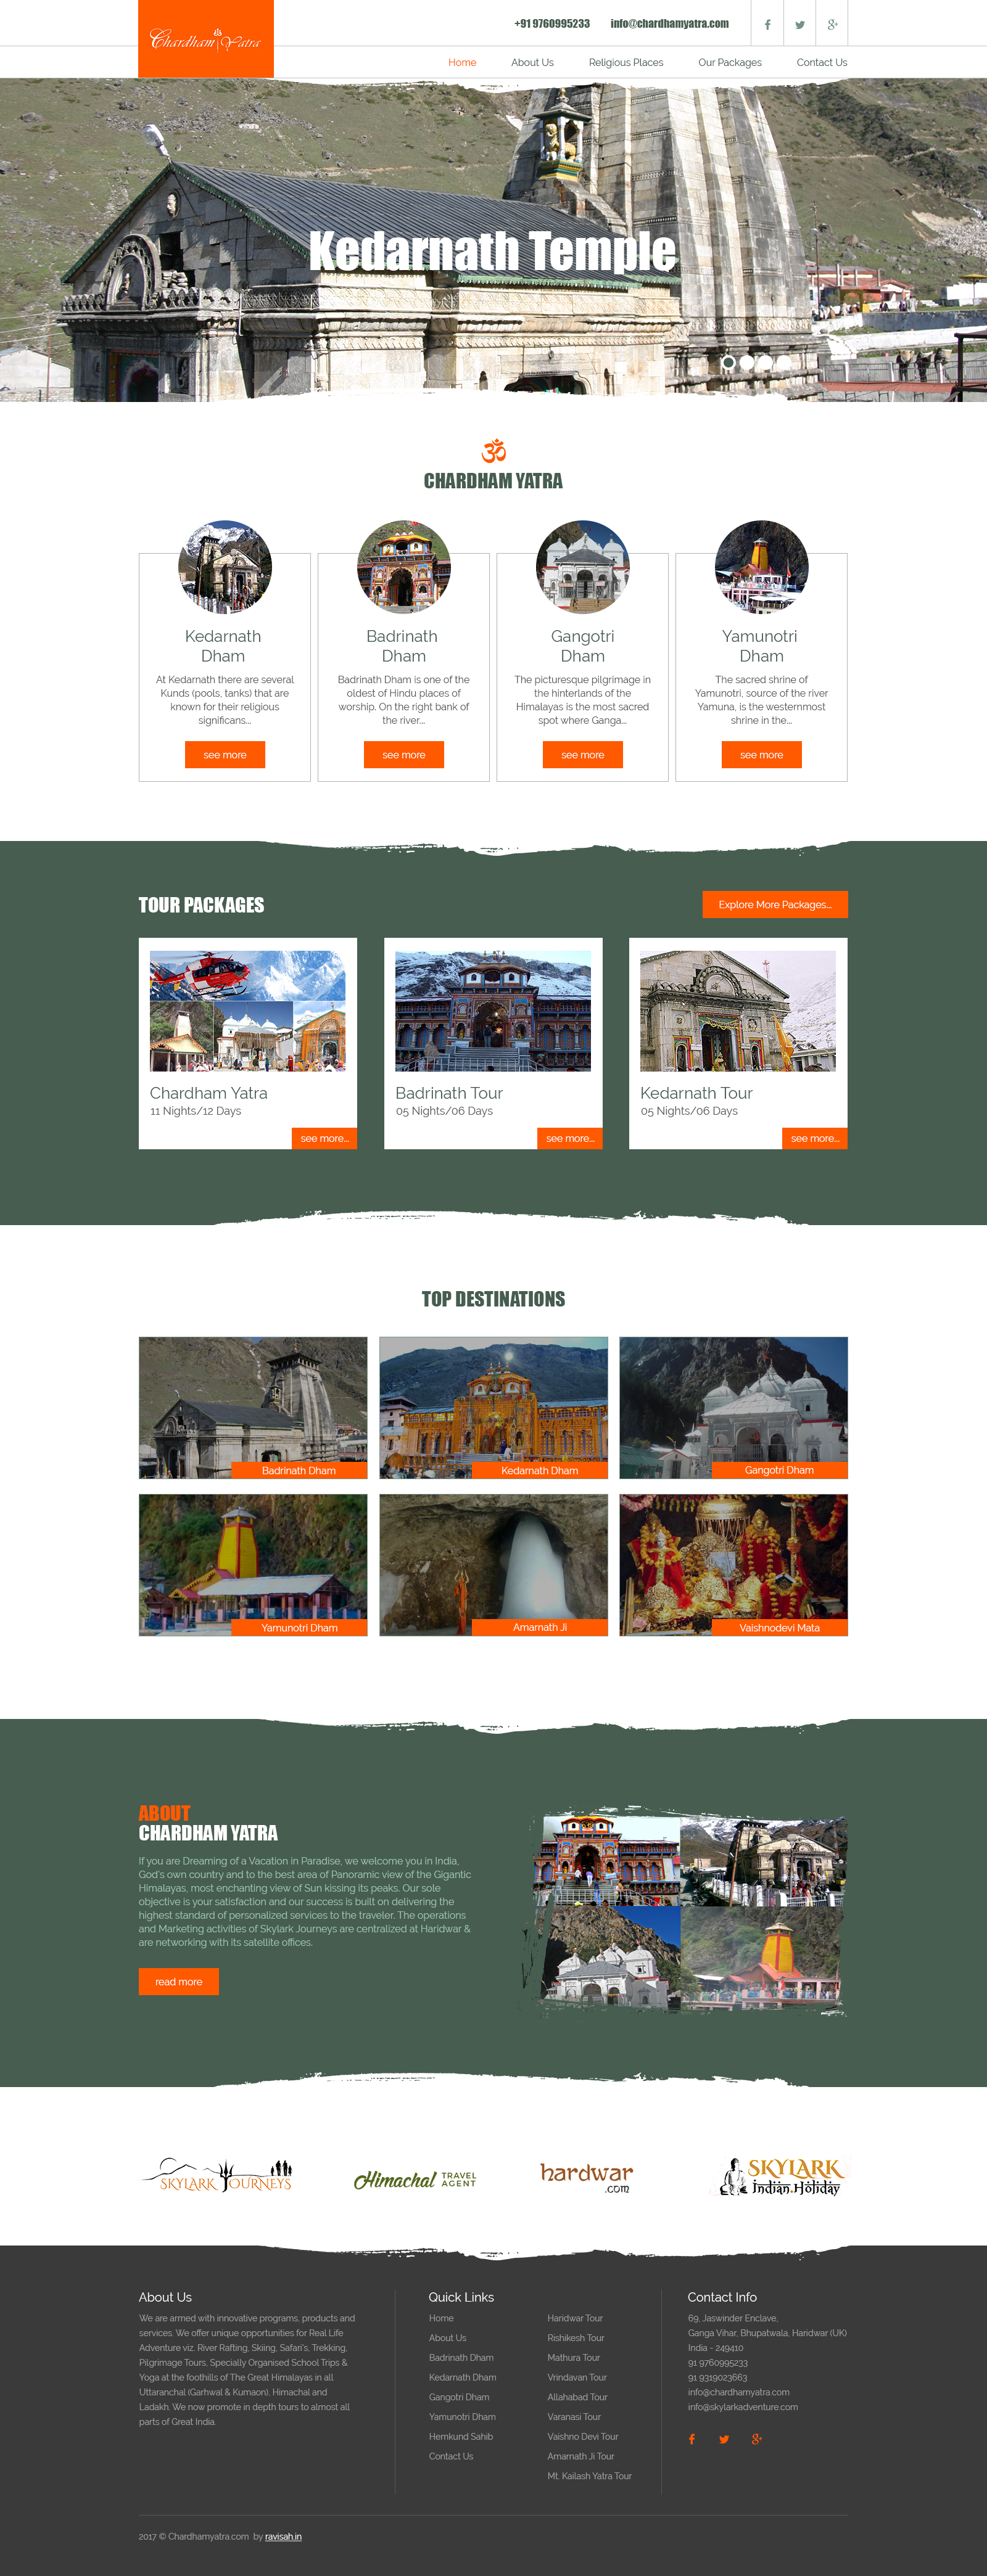 Chardham Yatra Website Design